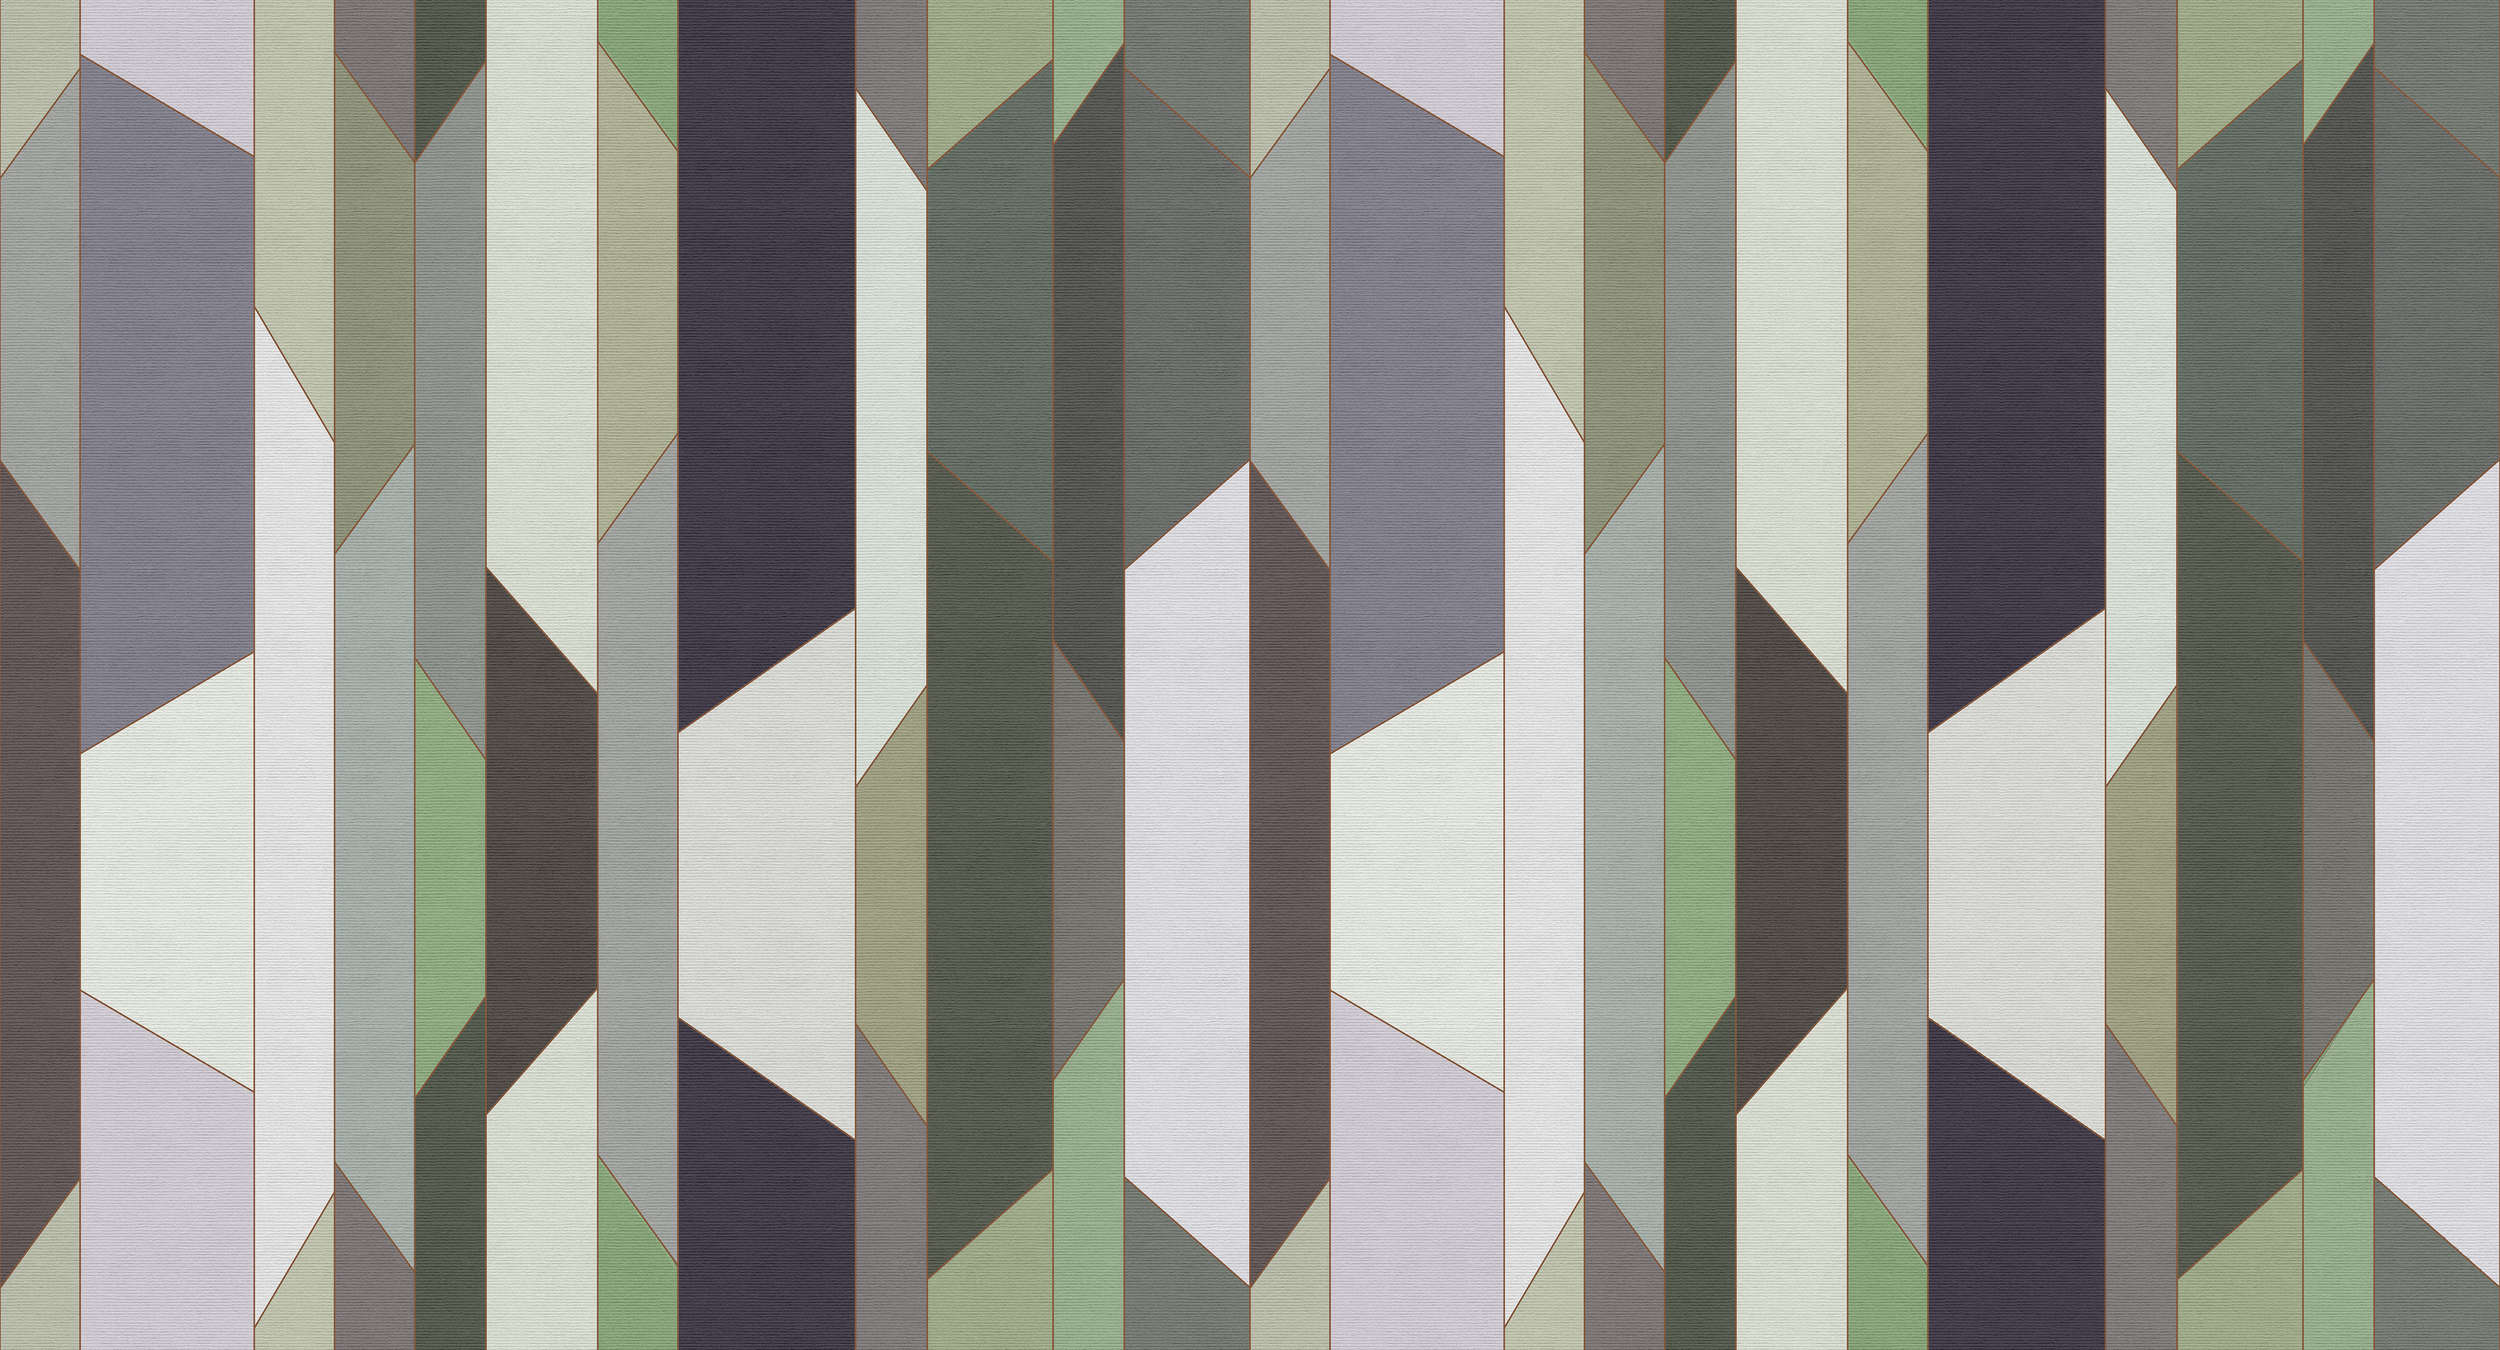             Fold 1 - Retro style stripe wallpaper in ribbed texture - Beige, Cream | Pearl smooth non-woven
        